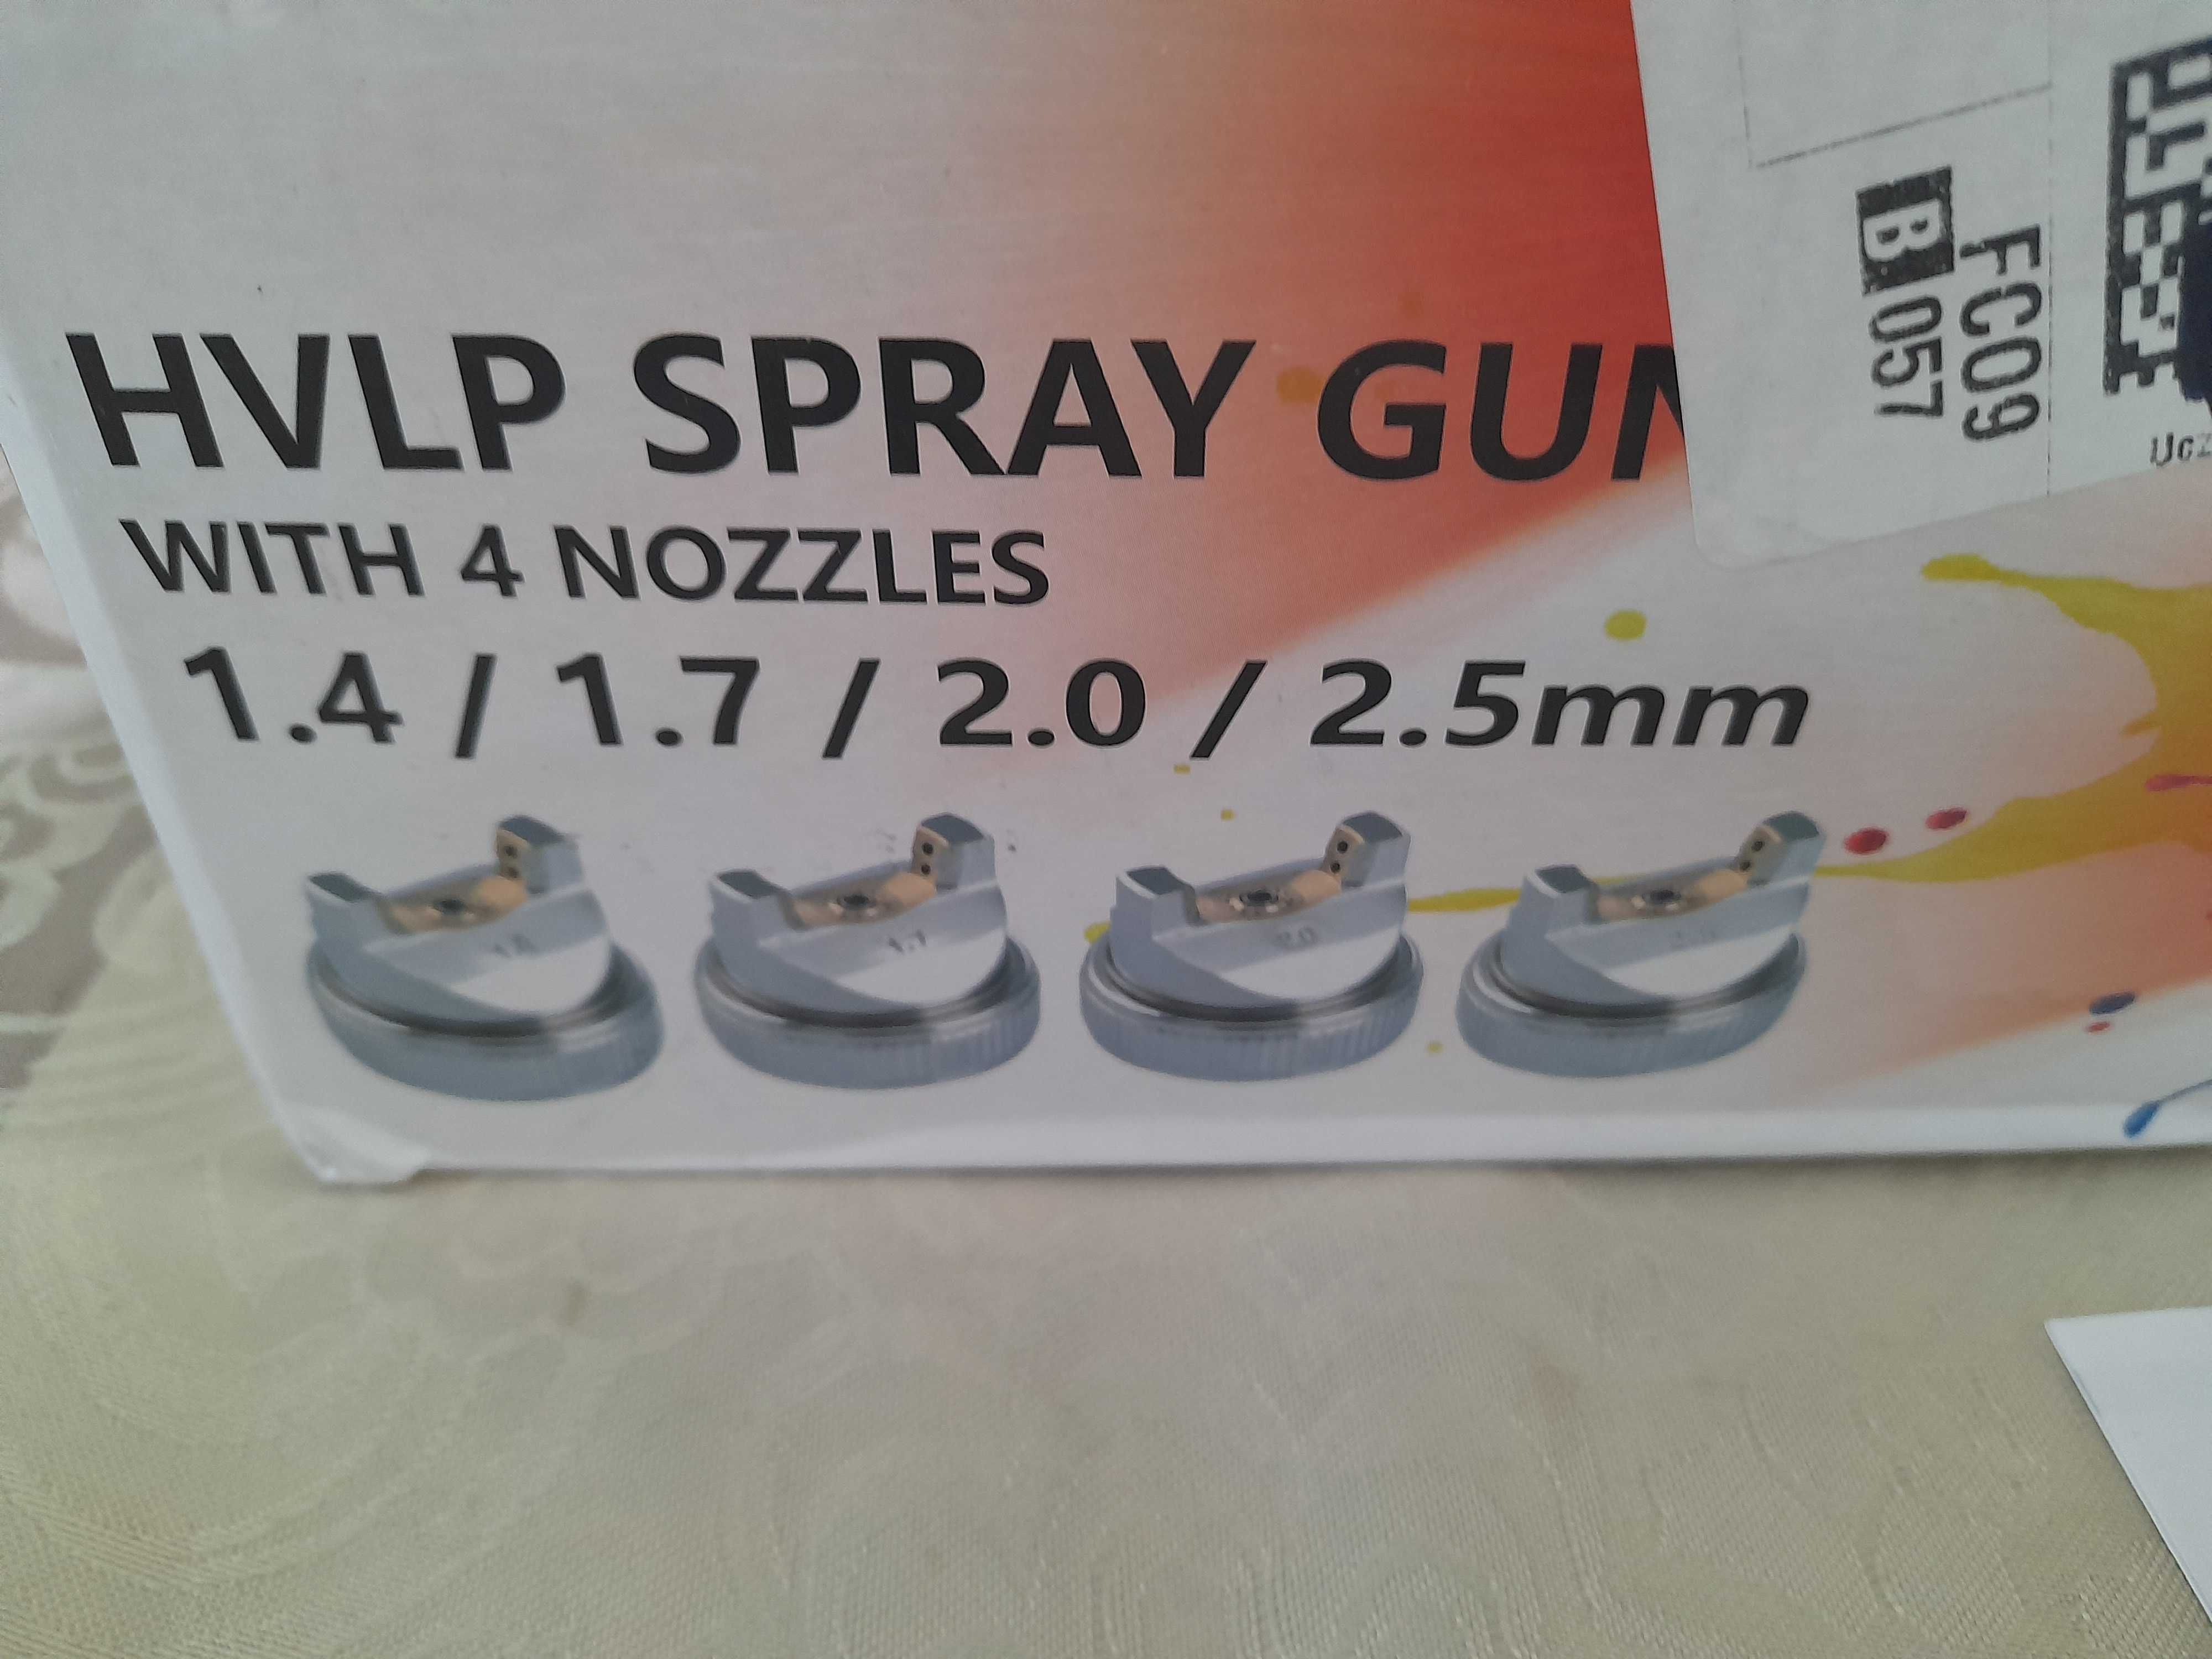 Professional Hvlp Spray Gun Paint Spray System Gravity Feed 4 Nozzles